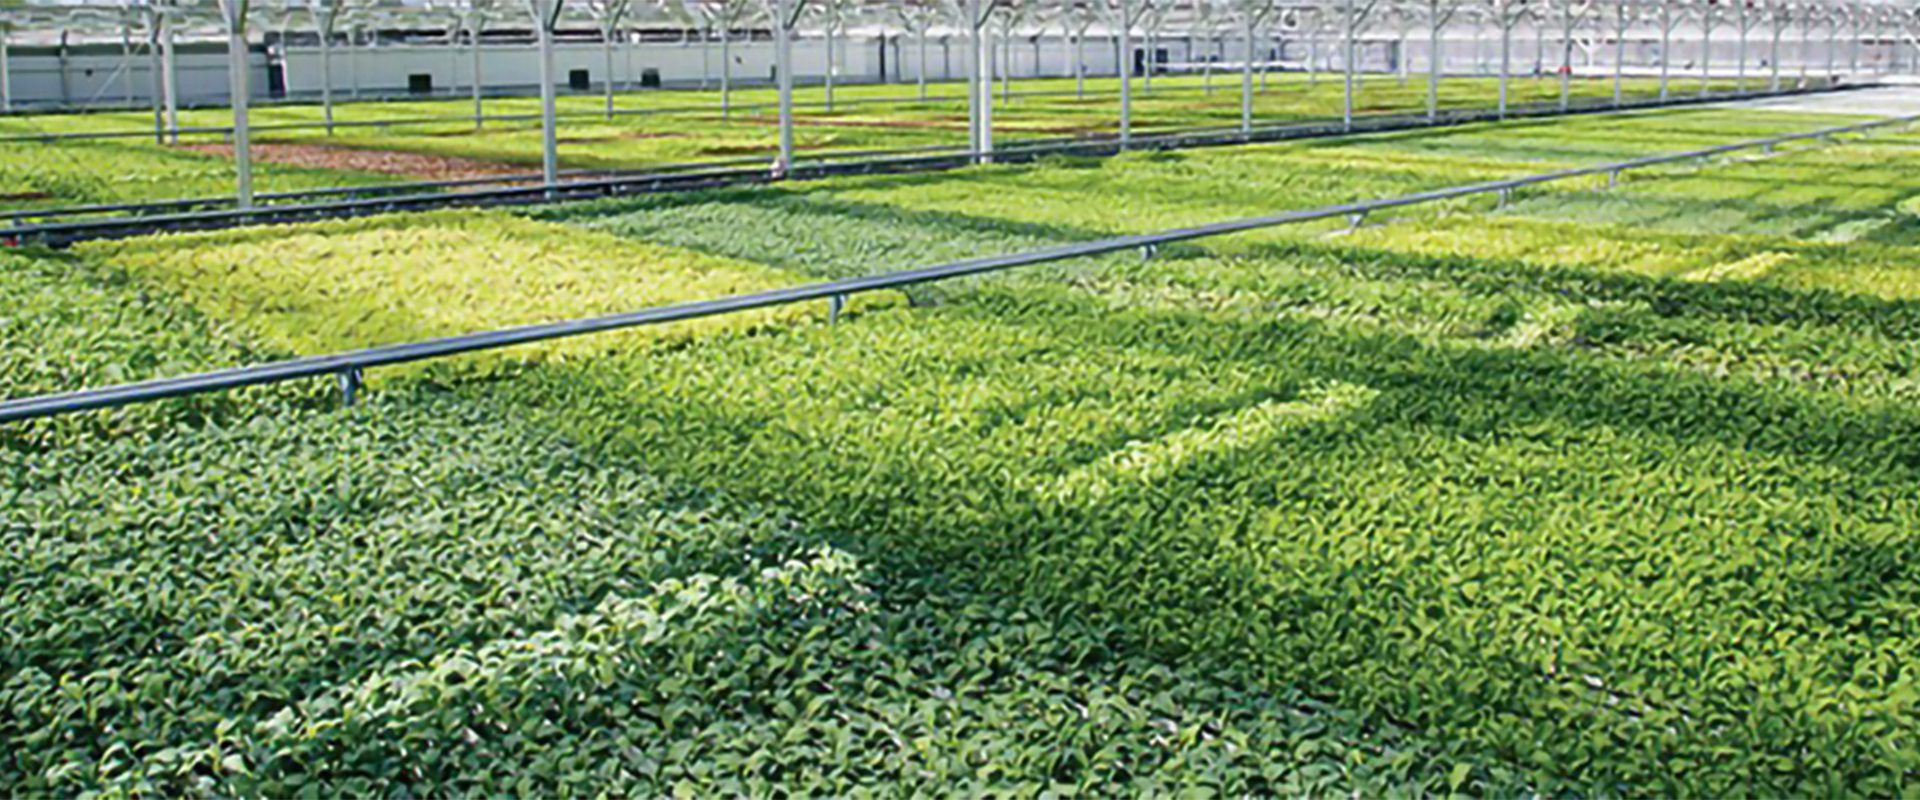 Feton LED Grow Light for Greenhouse